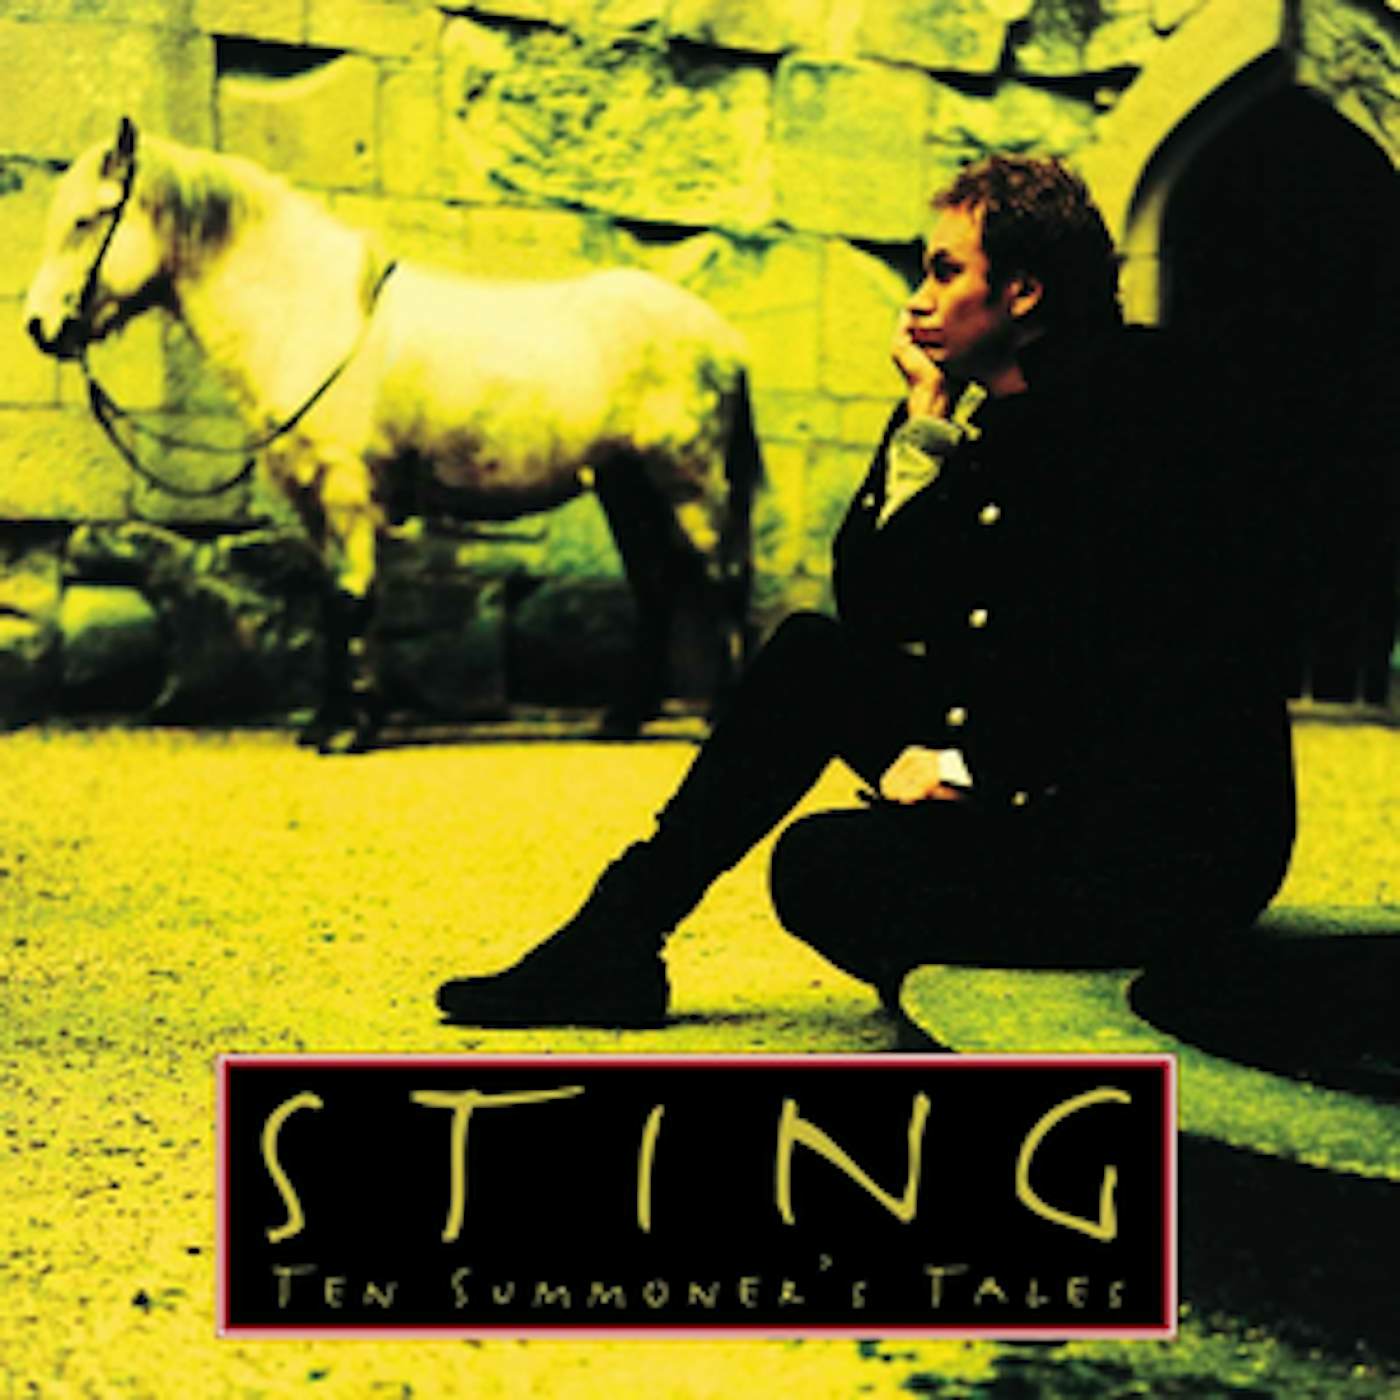 Sting - My Song Doppio Vinile LP 180 gr + Poster - Discomania Mix